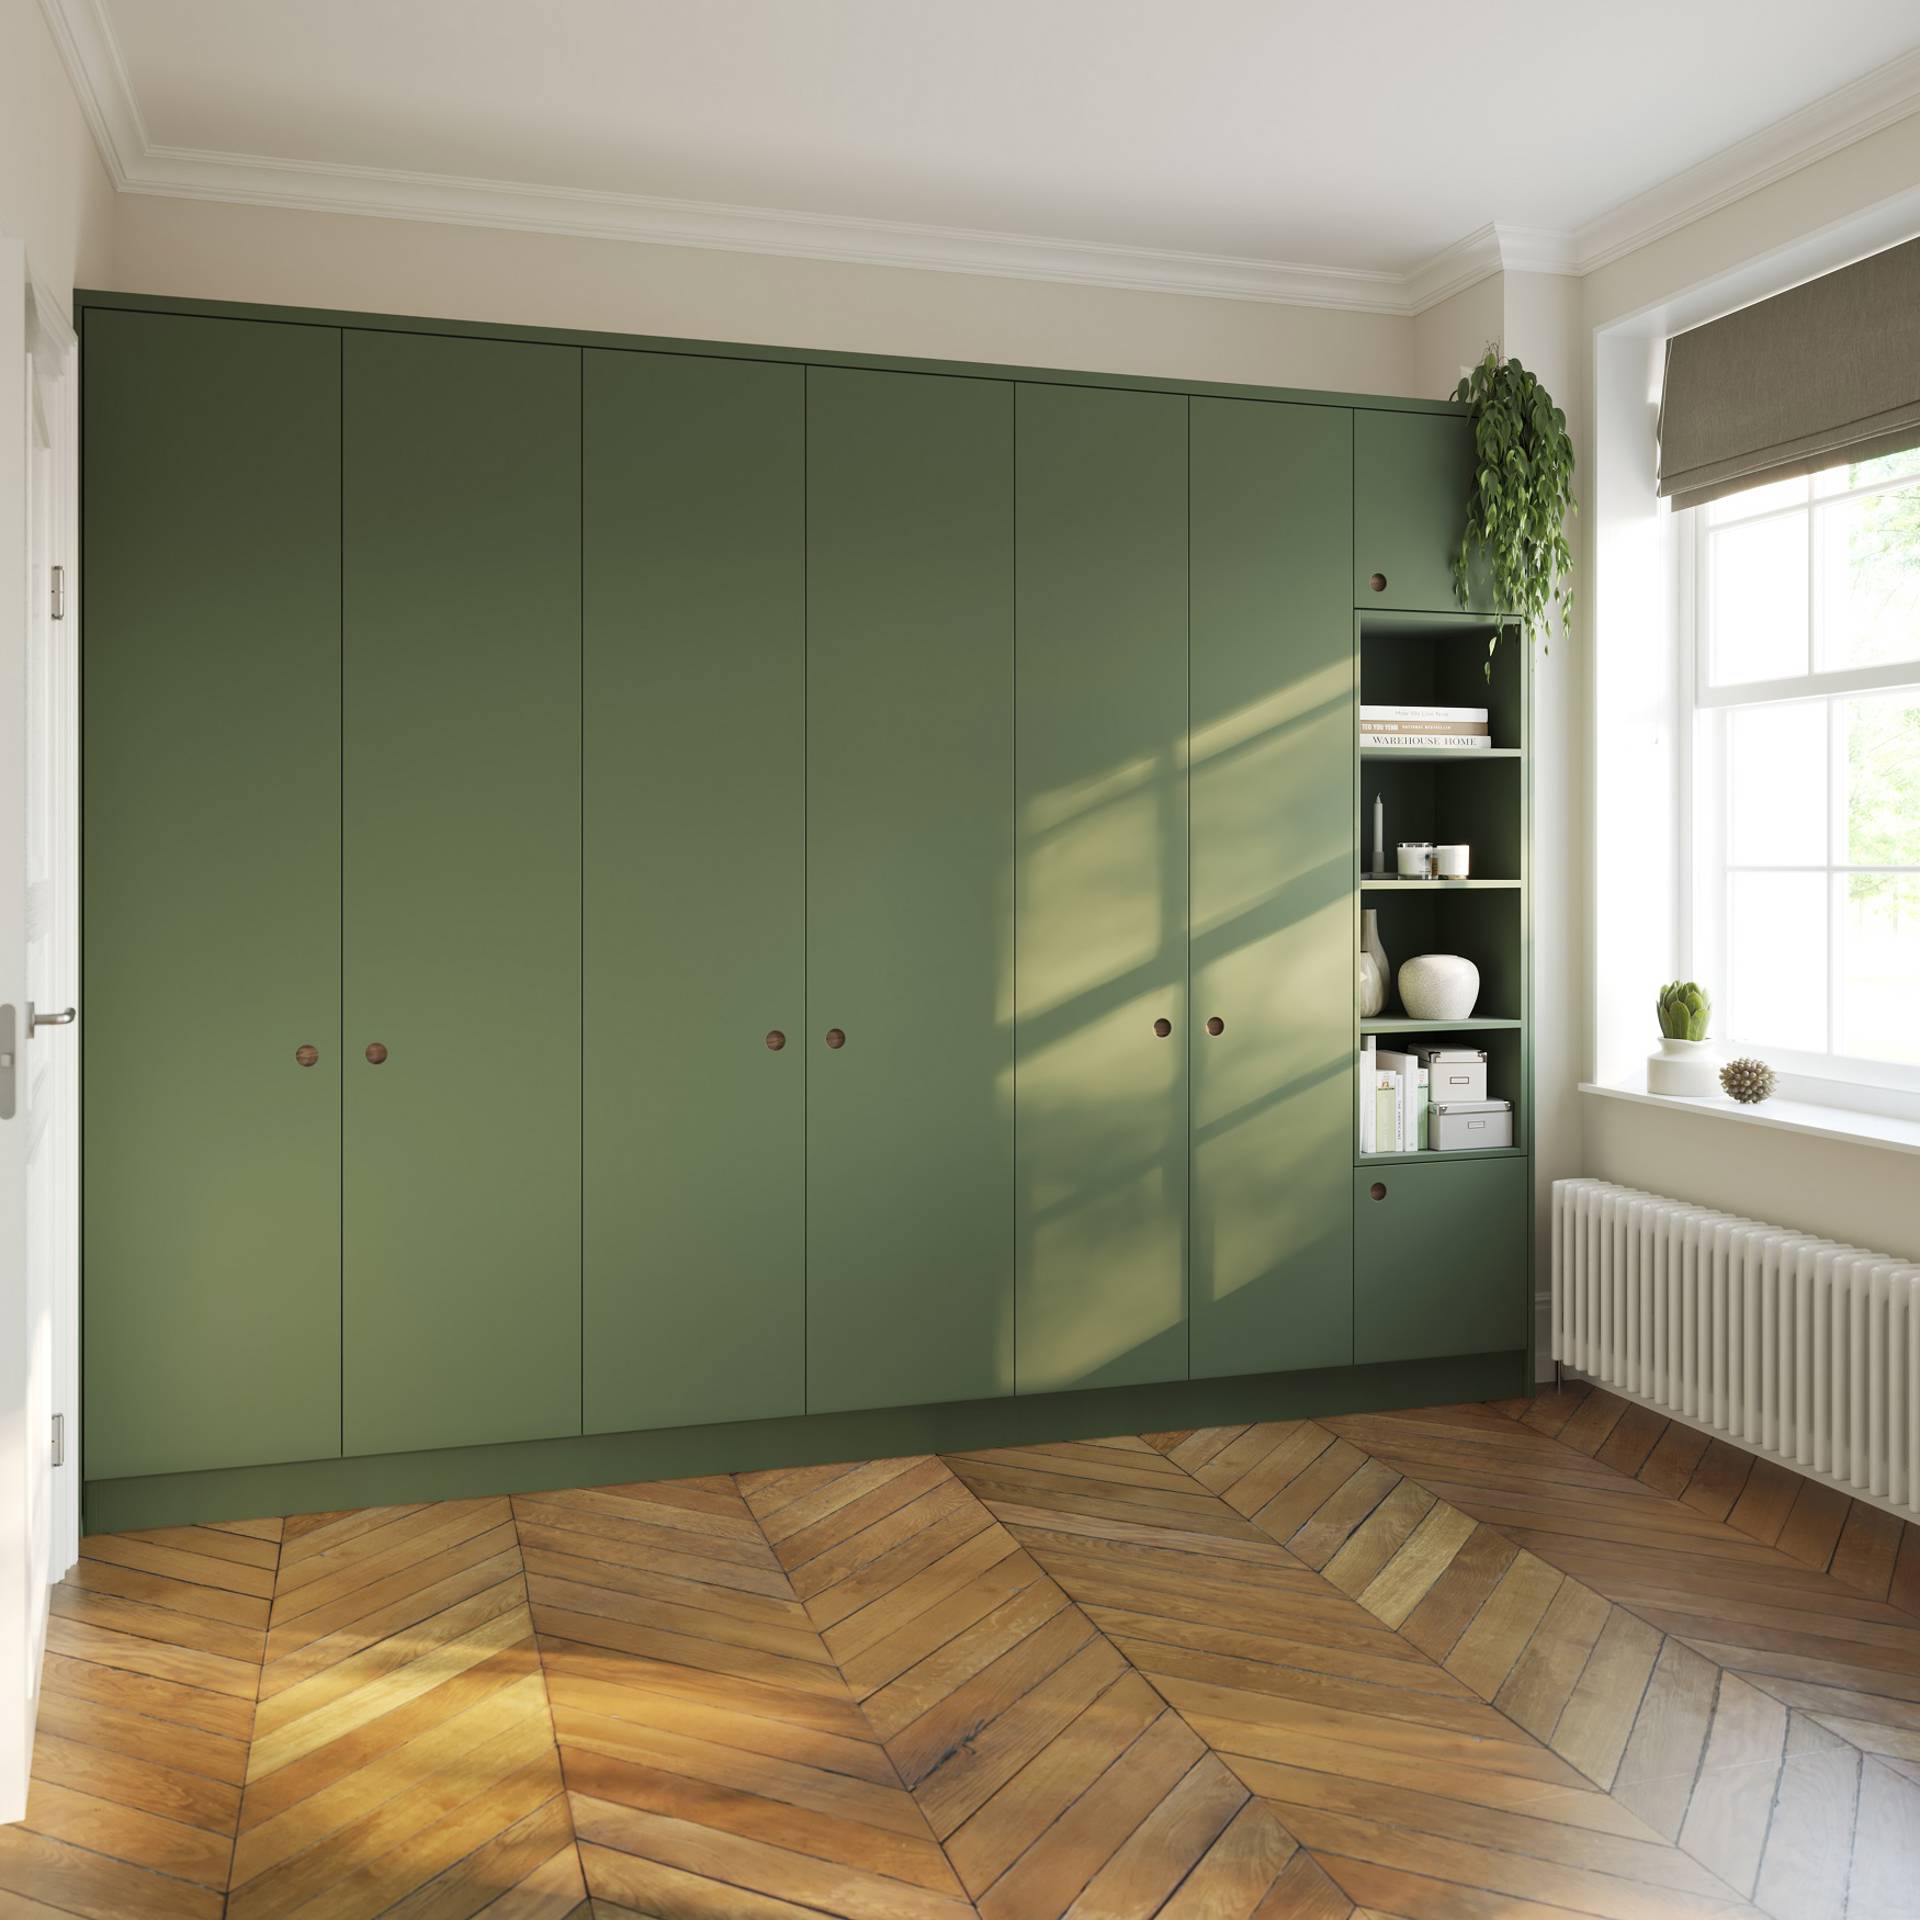 Porter Bedroom   Portal Regents Green With Walnut Backplate ?width=1920&quality=70